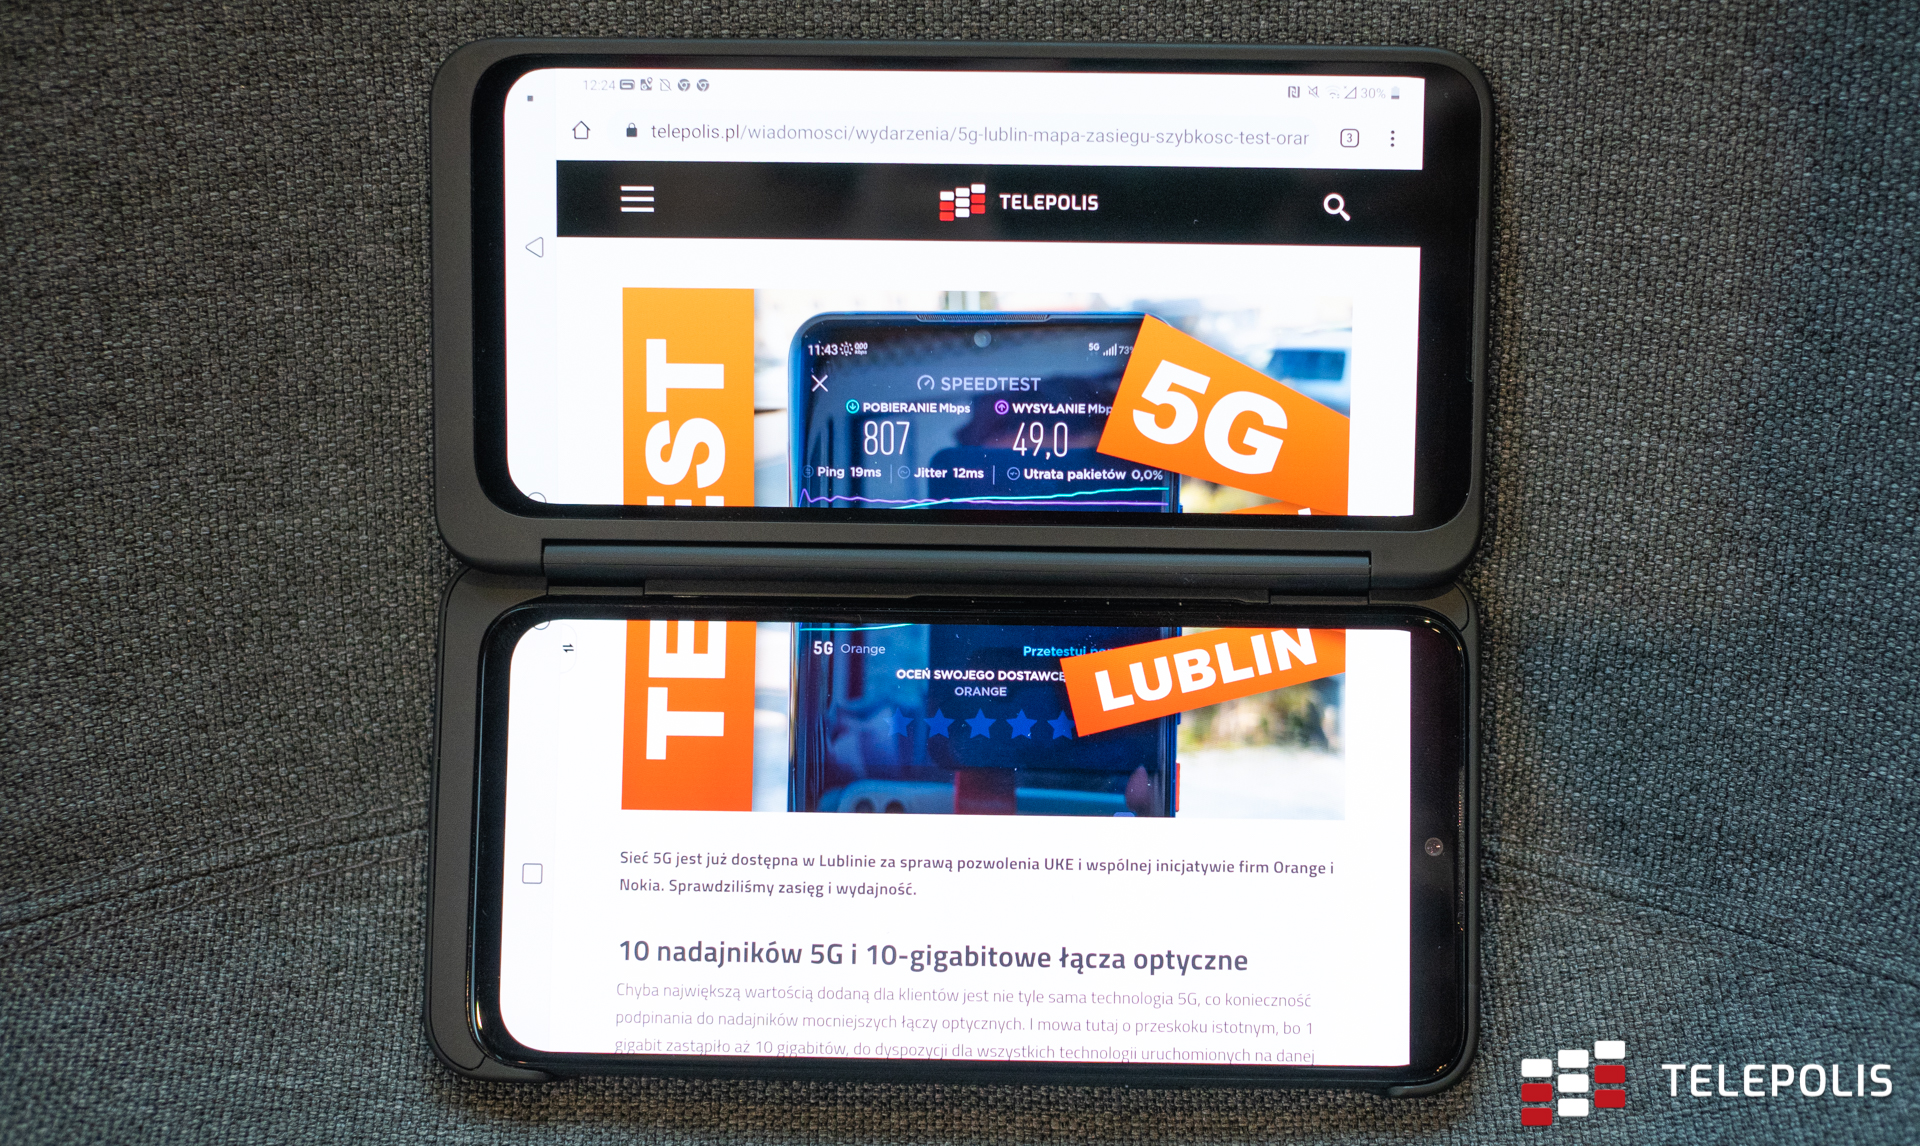 LG G8 ThinQ telepolis.pl na dwóch ekranach